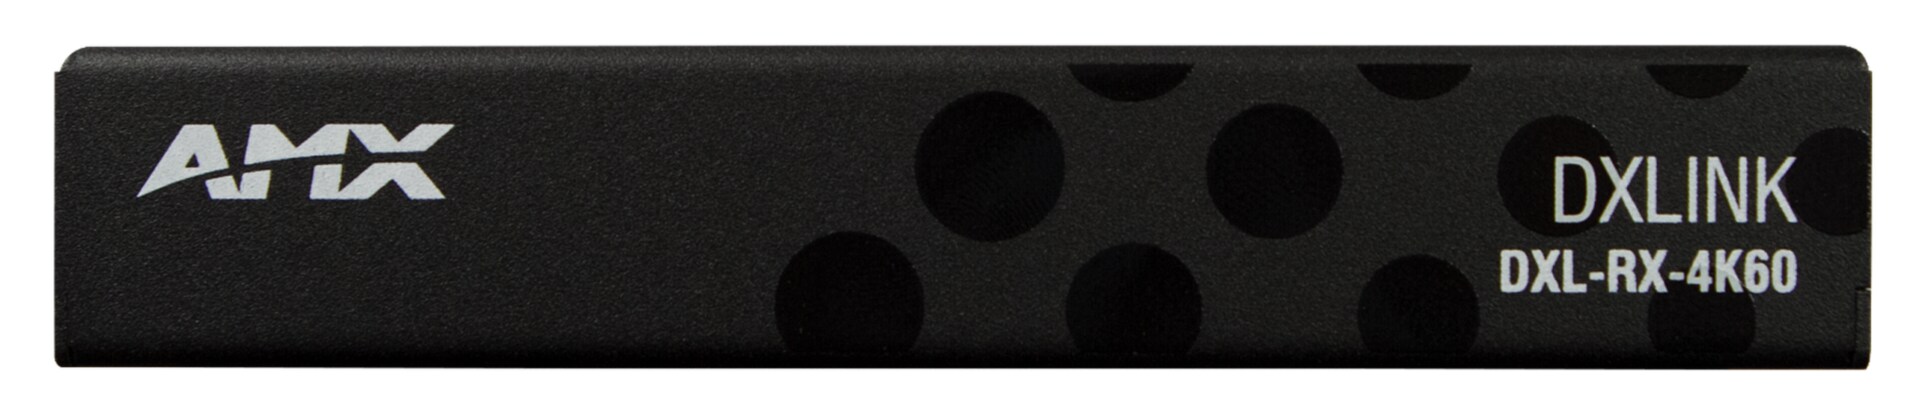 AMX DXLite DXL-RX-4K60 4K60 4:4:4 Receiver - video/audio/USB/serial extende